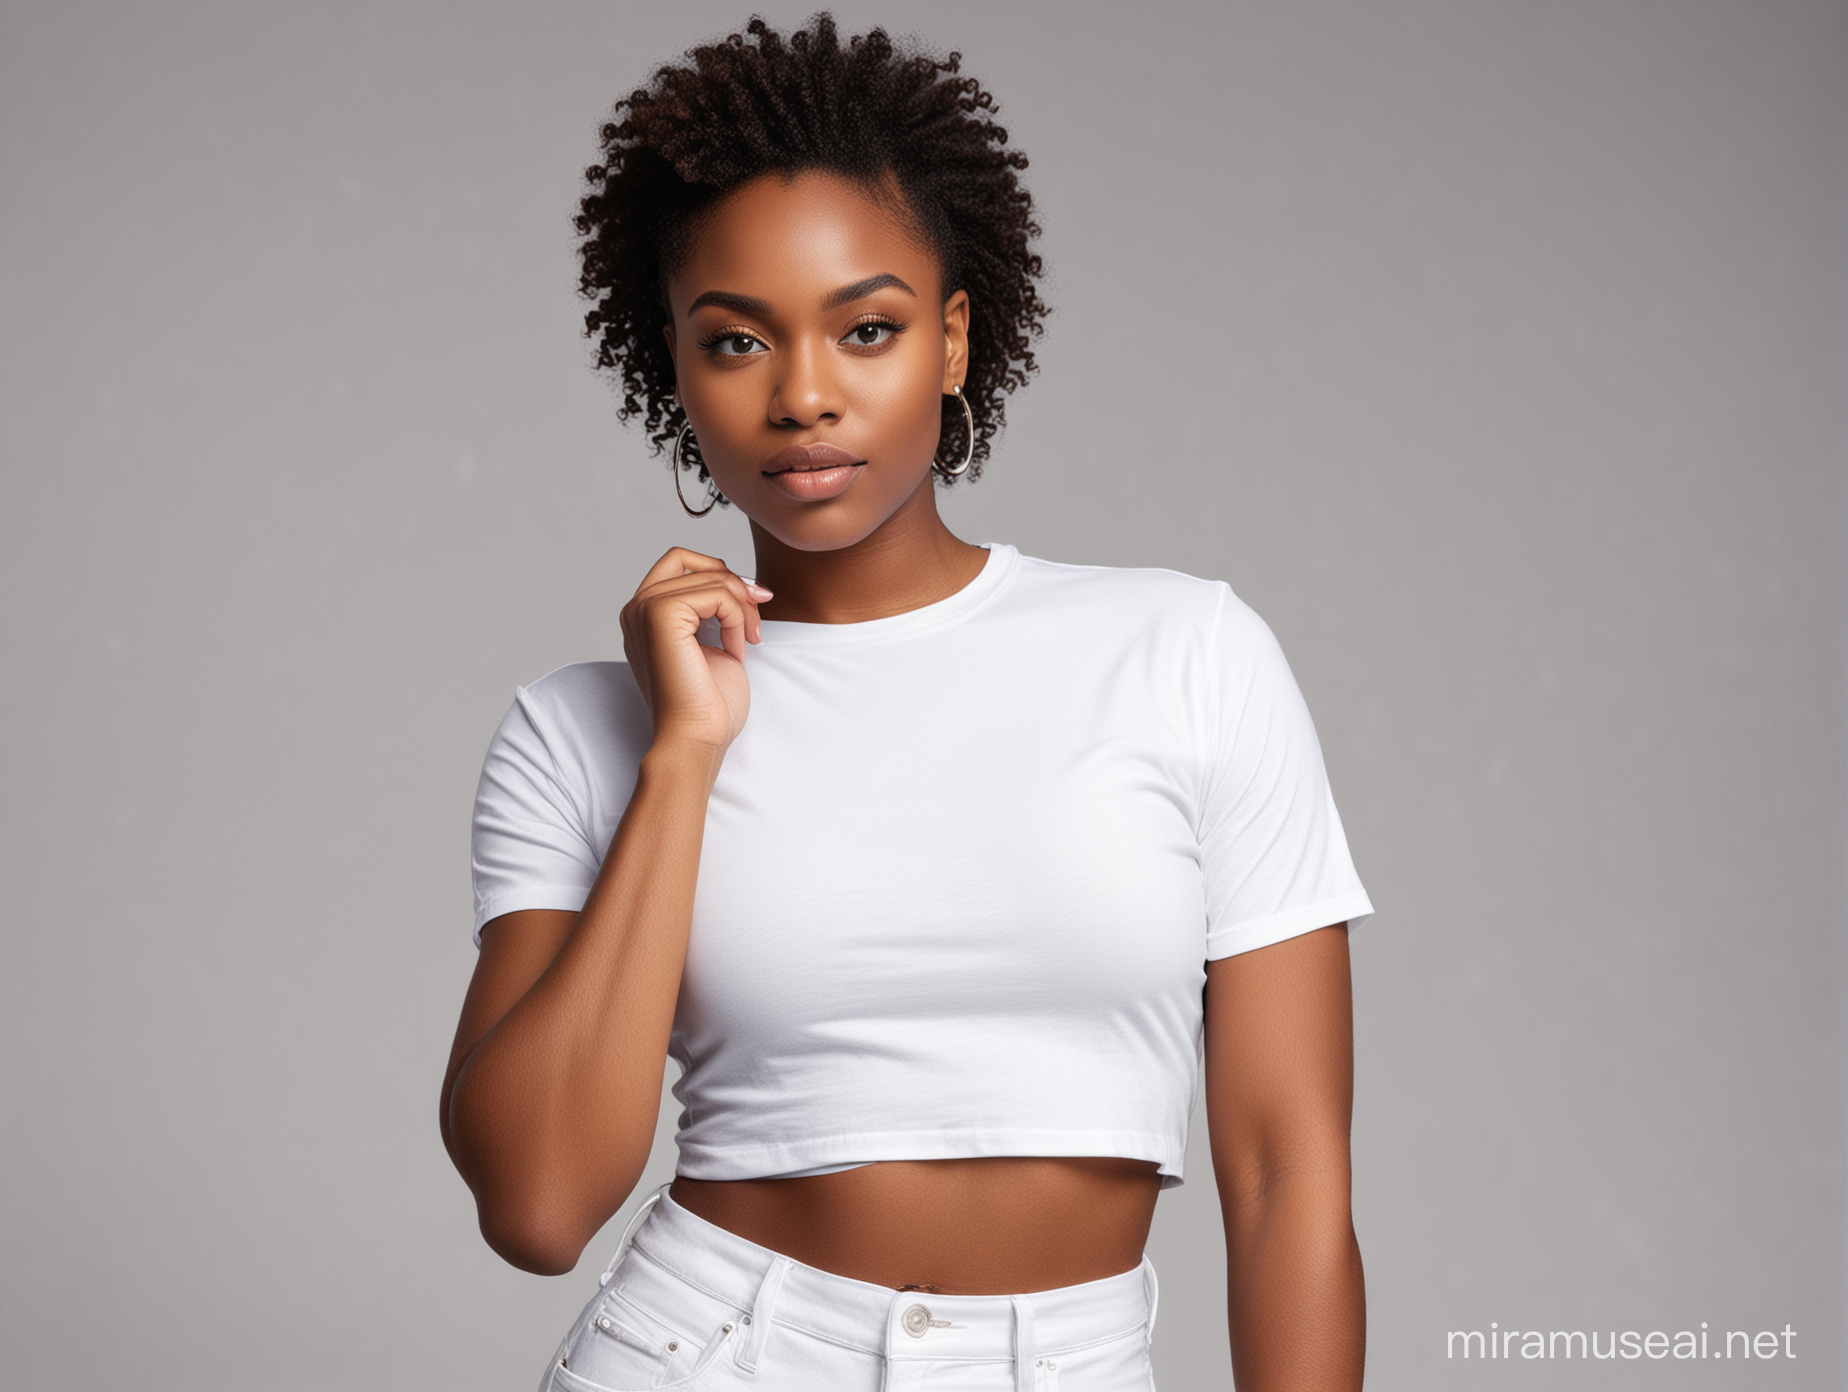 A beautiful black woman model wearing a blank white crop top t-shirt